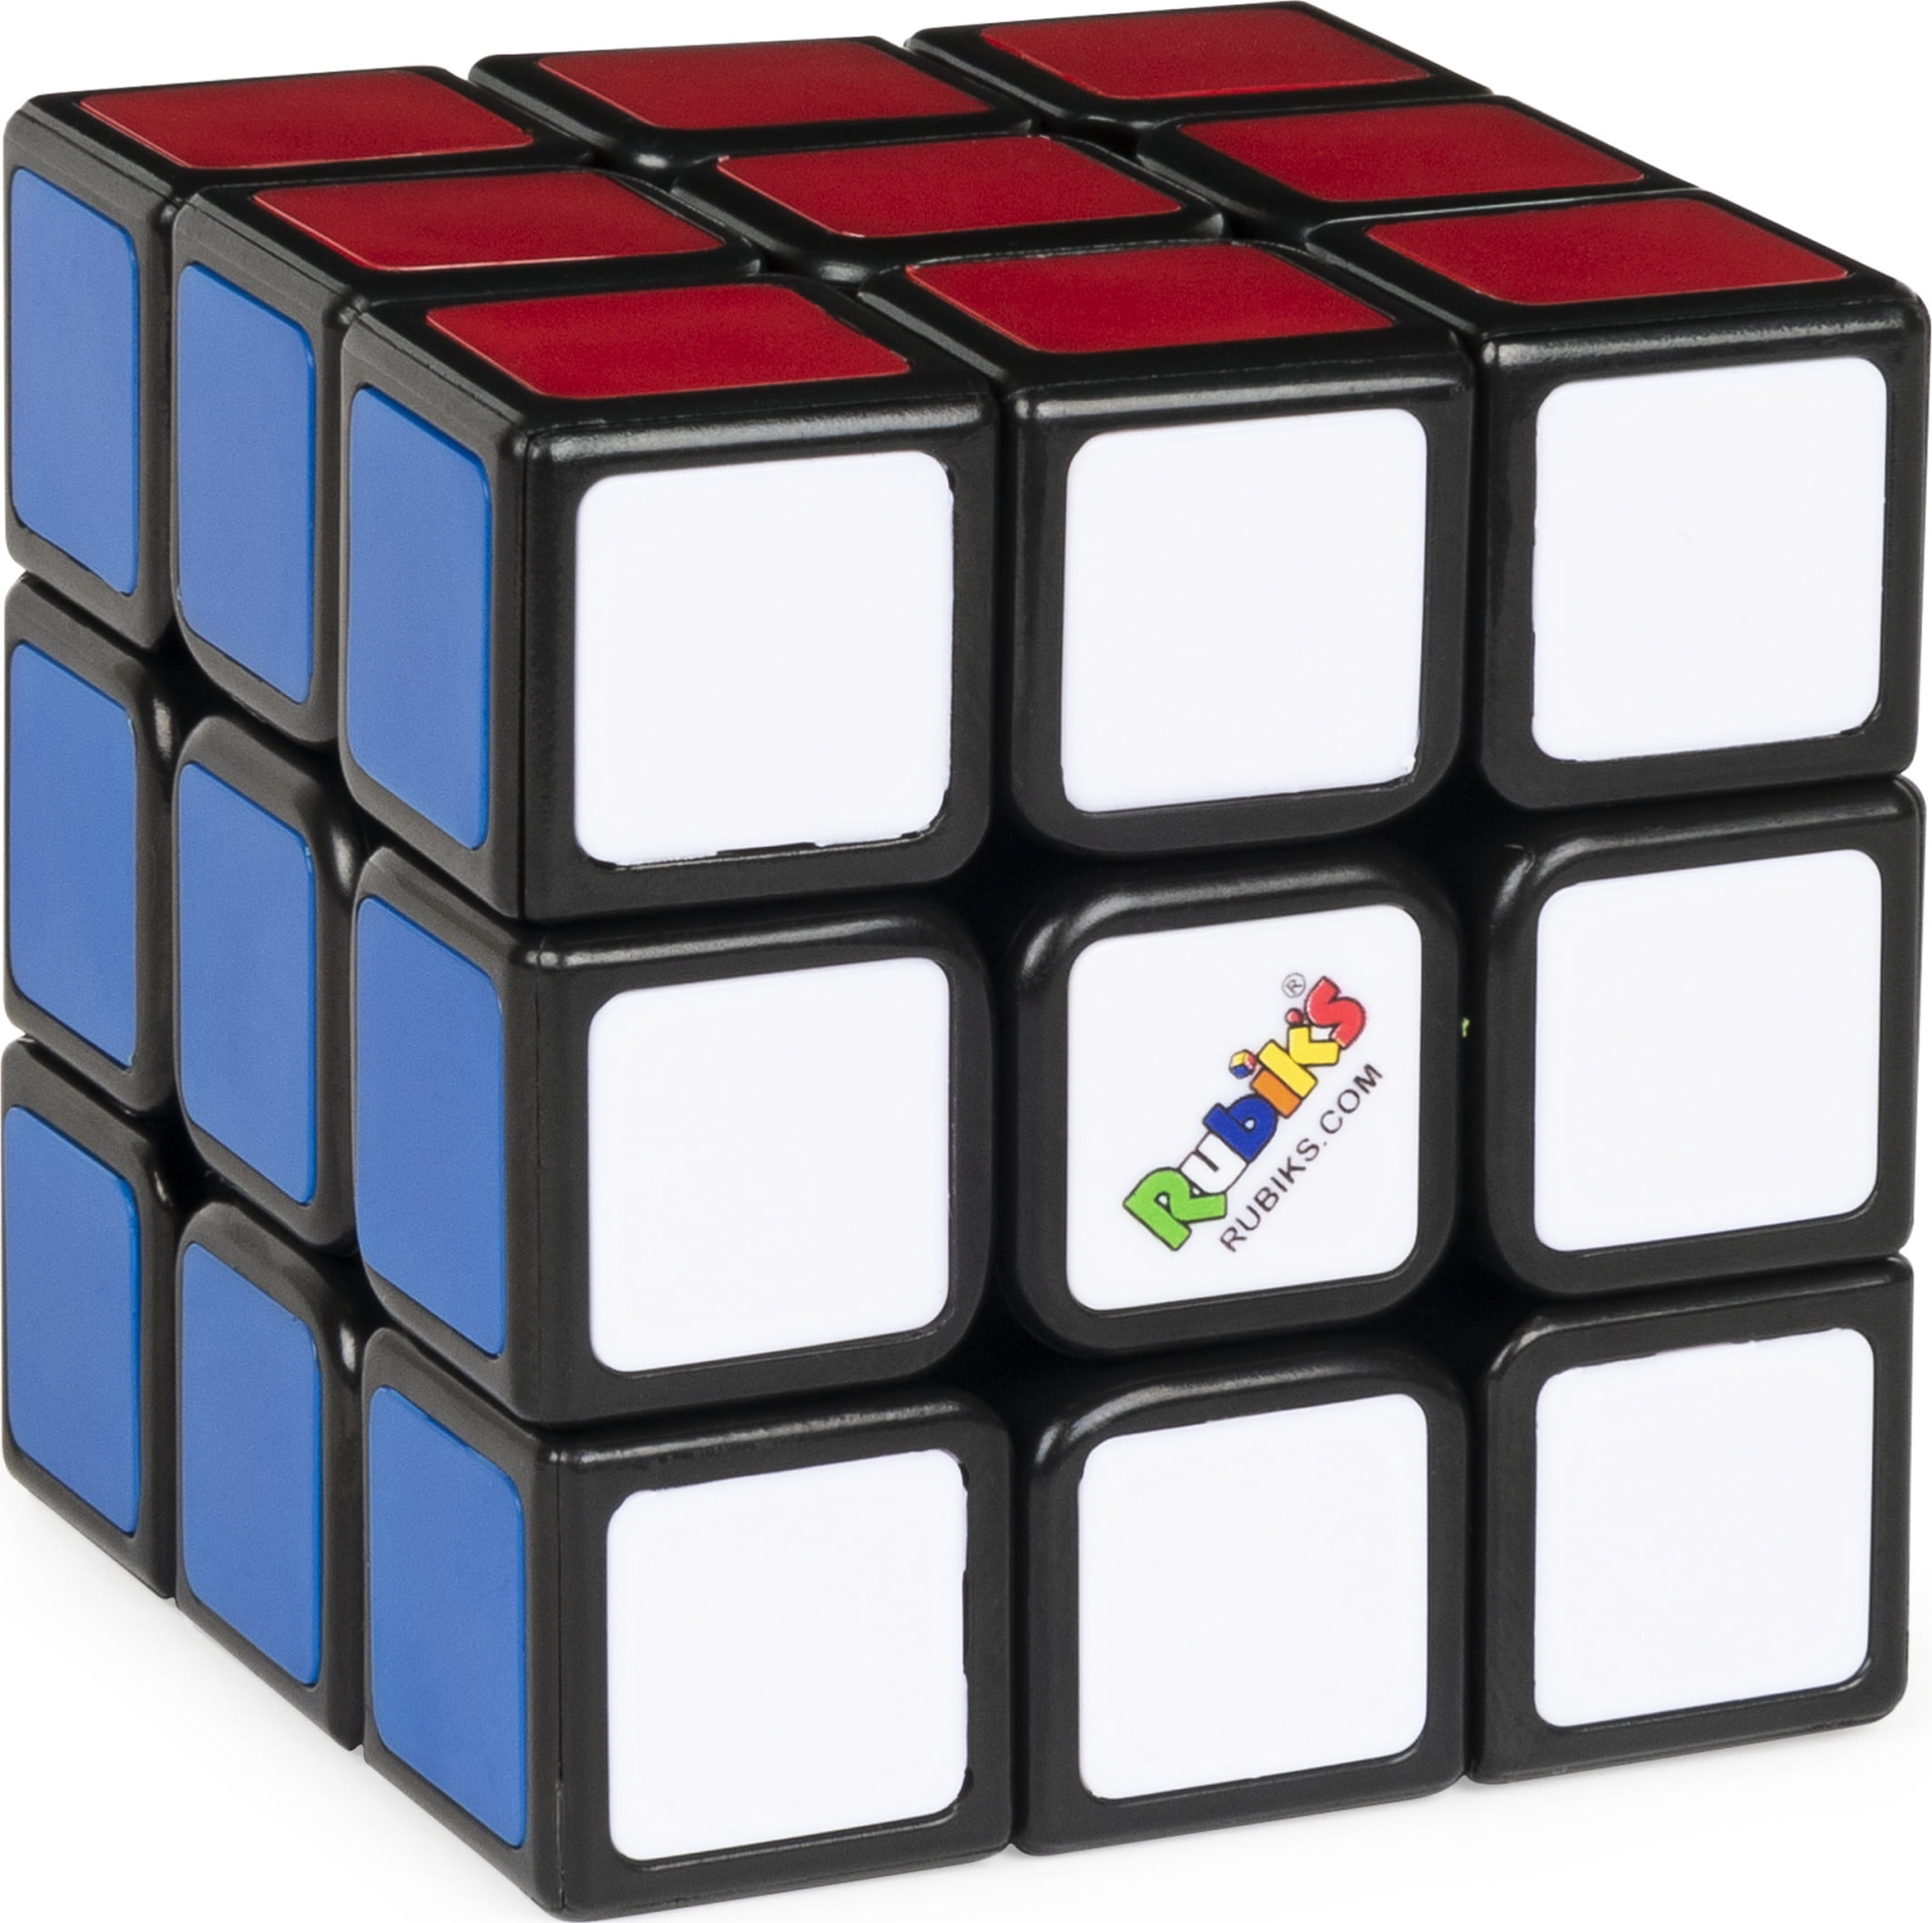 Rubik’s Cube, The Original 3x3 Color-Matching Puzzle